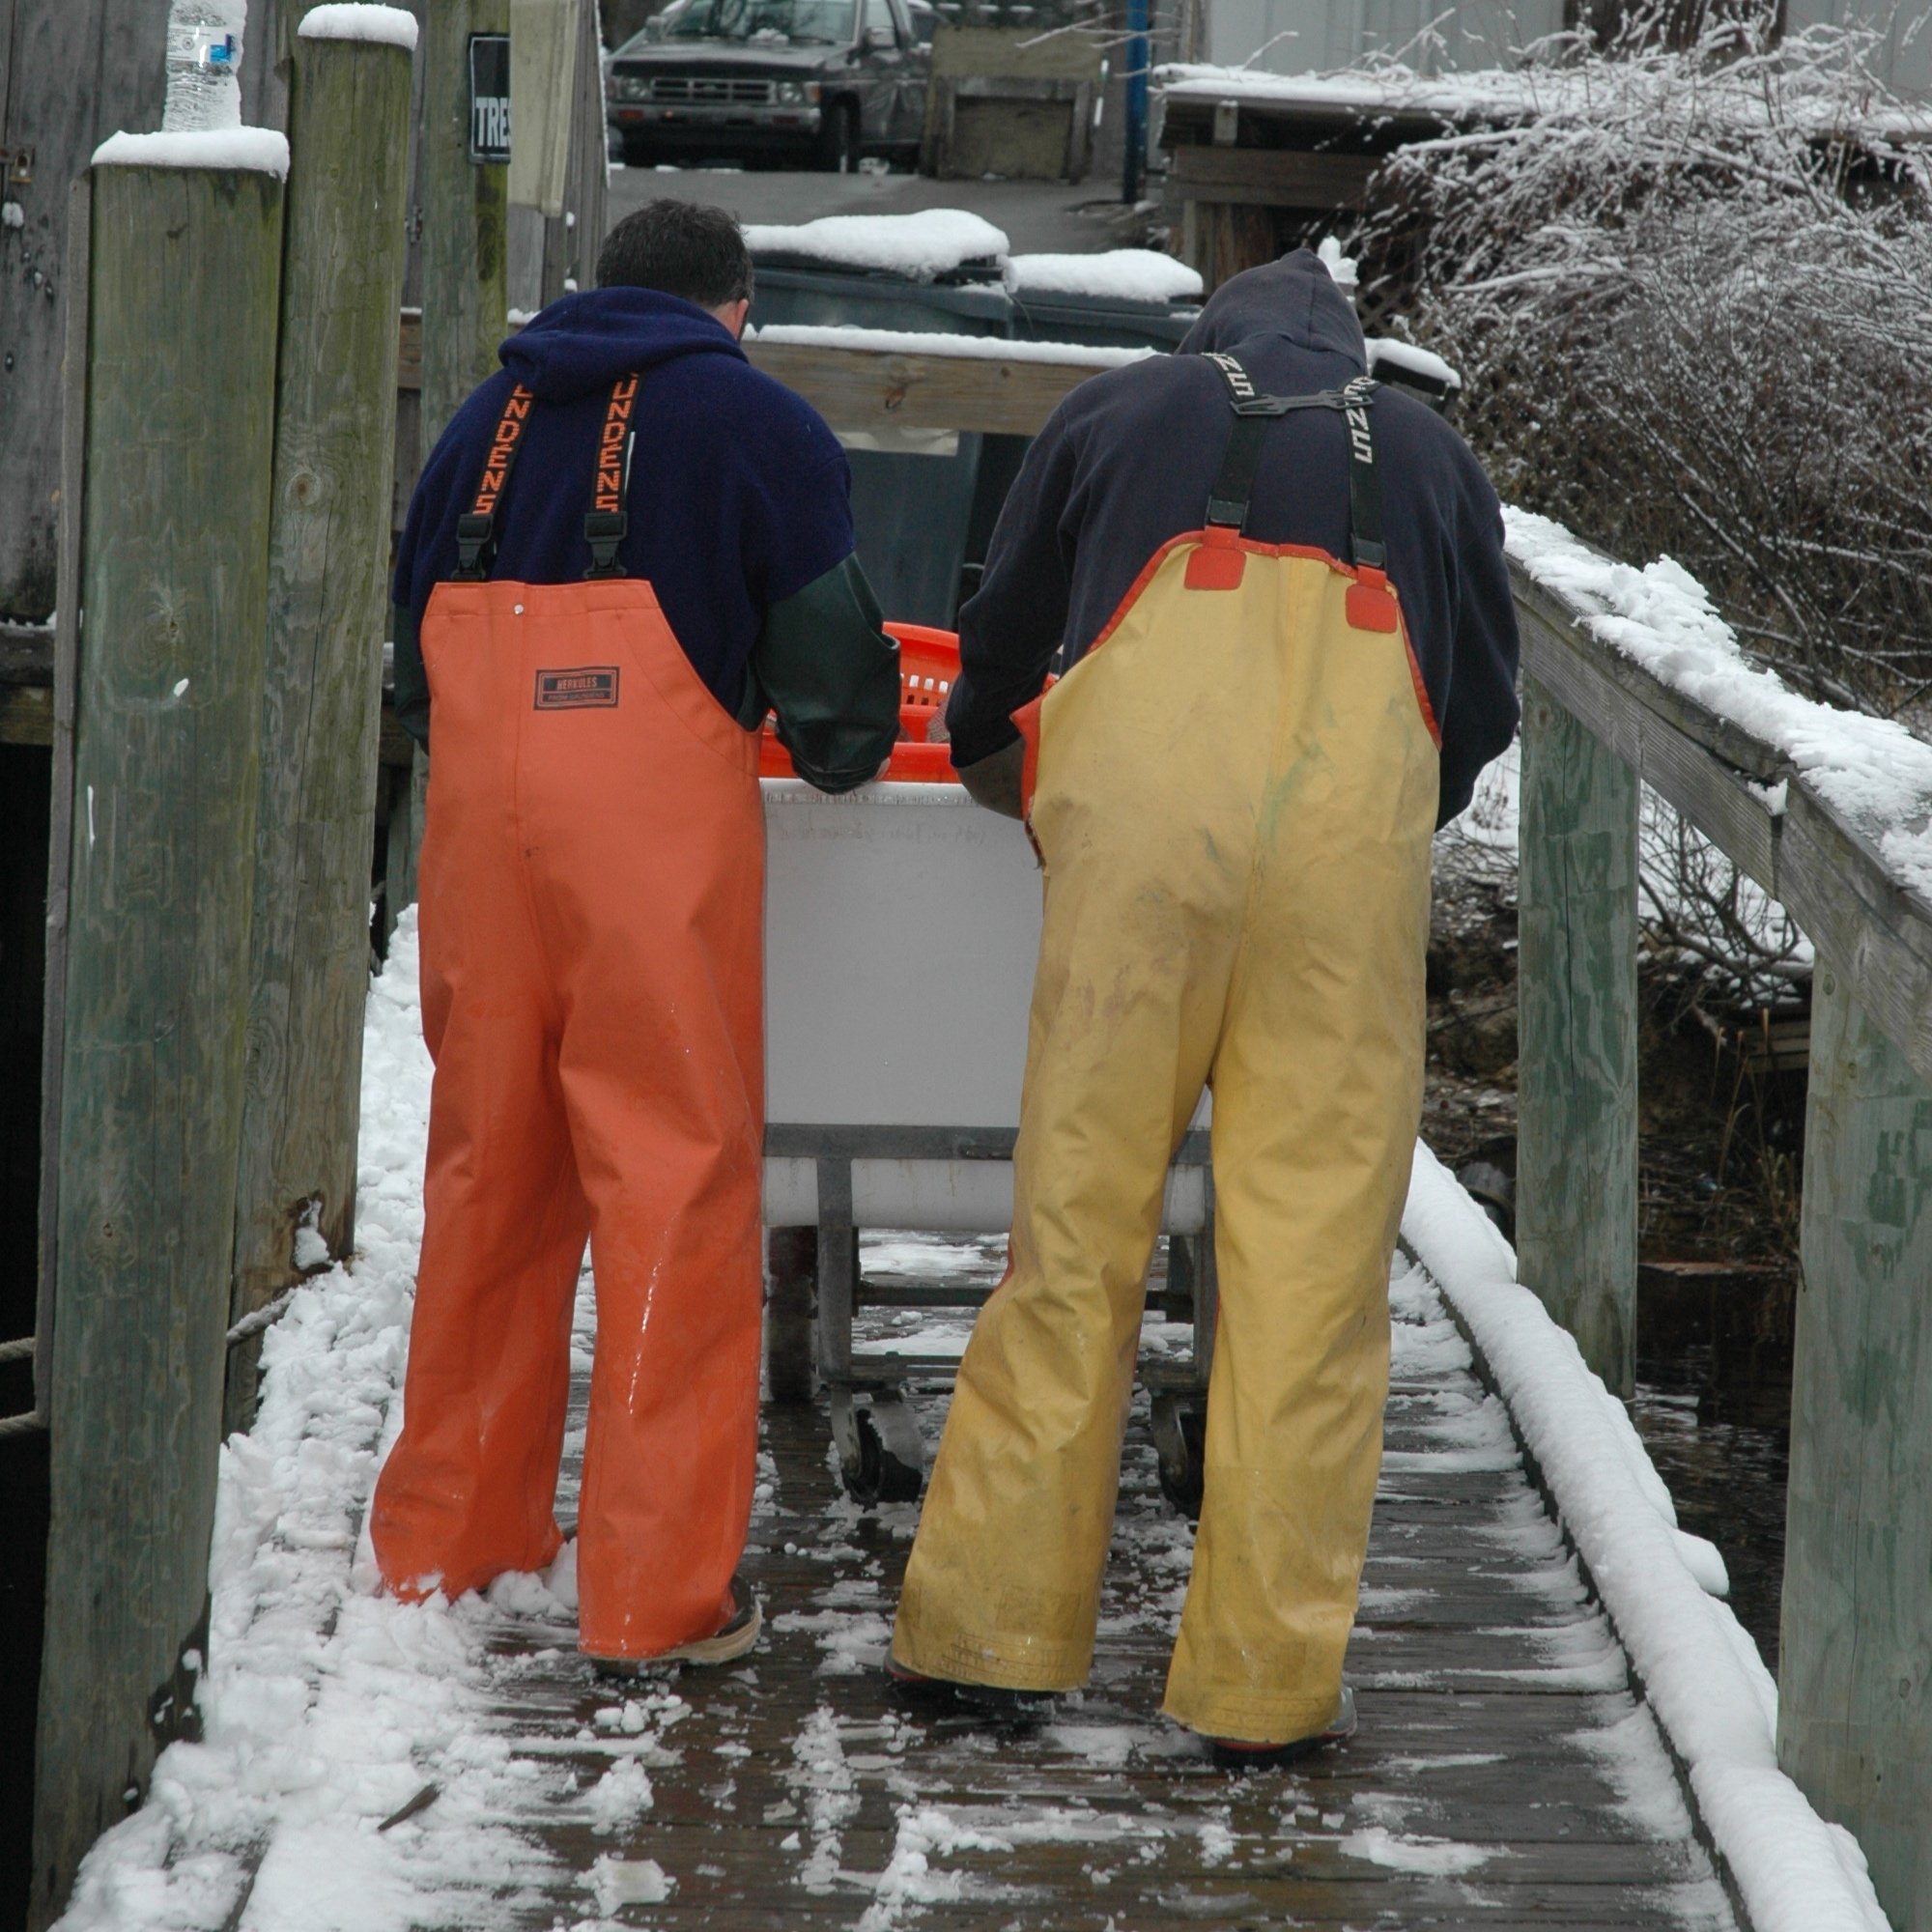 Two fishermen on dock in snow